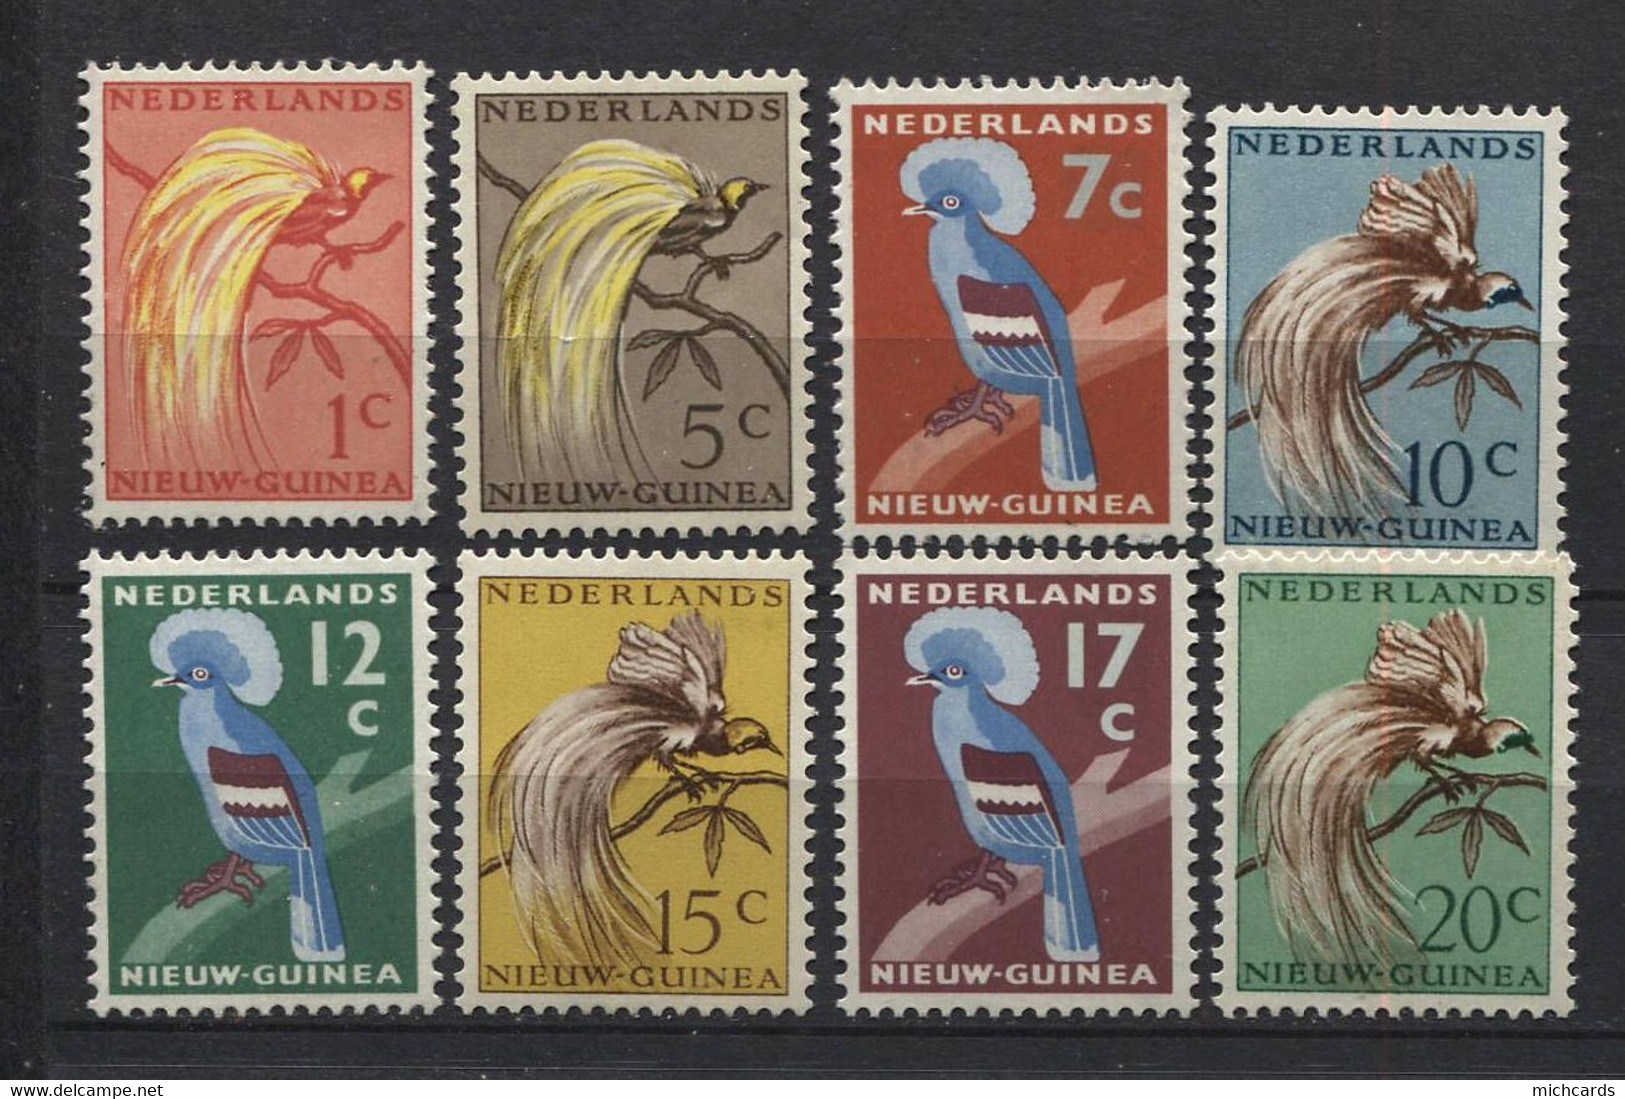 180 NOUVELLE GUINEE NEERLANDAISE 1954/59 - Y&T 25/29 - Oiseau - Neuf ** (MNH) Sans Charniere - Netherlands New Guinea